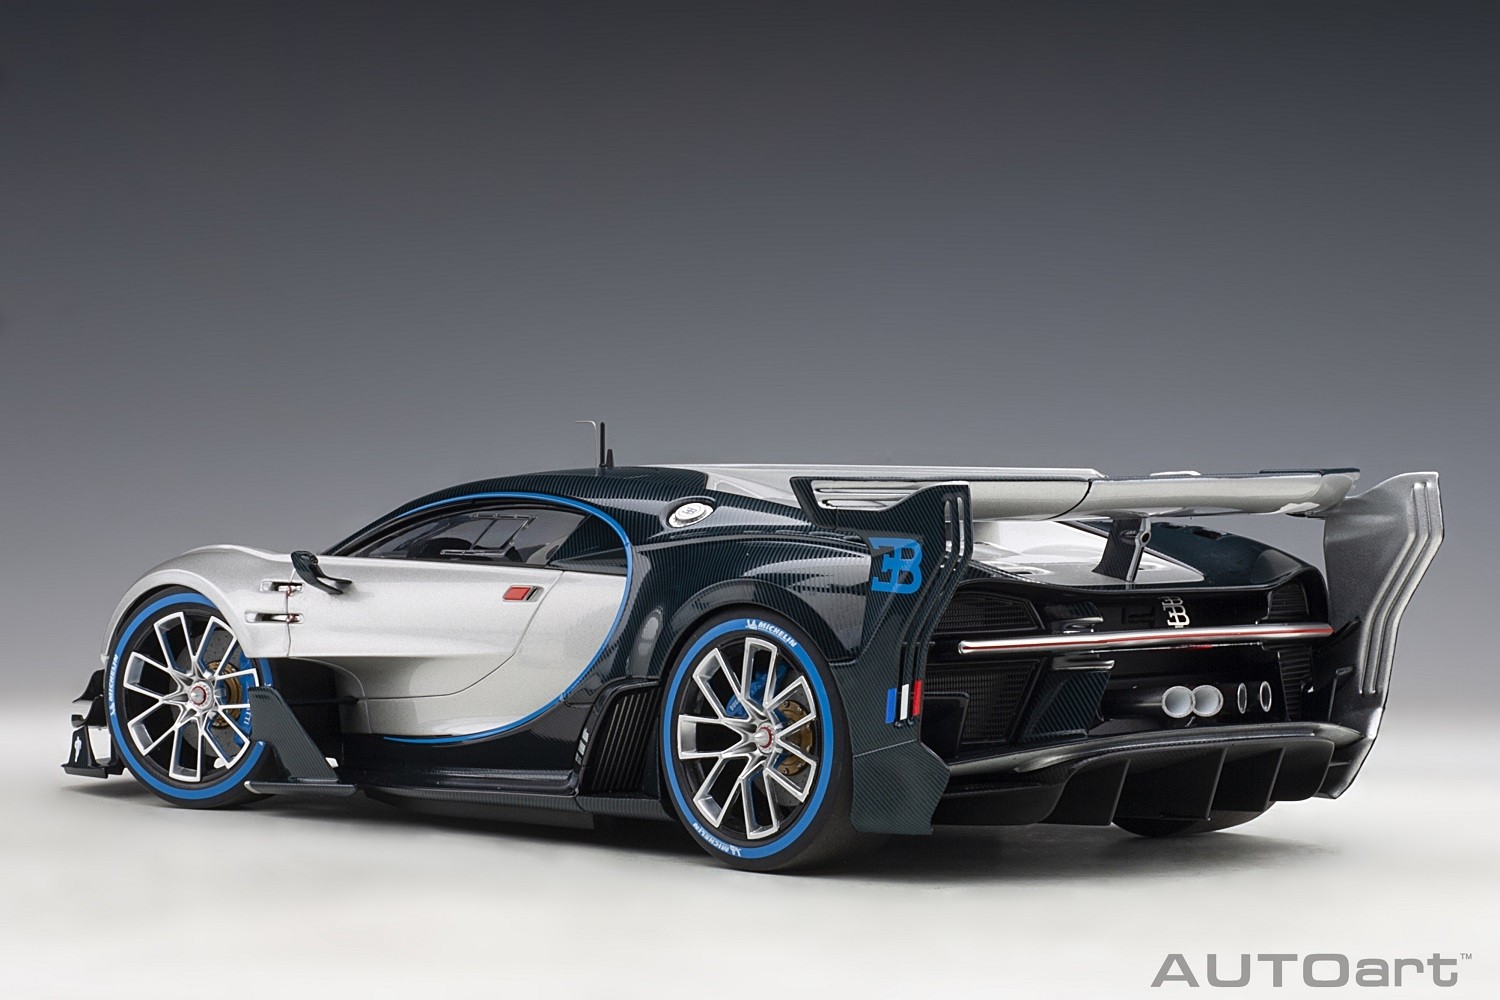 70987 1:18 scale and Argent Black Diecast Models Carbon Turismo Collectibles Bugatti ezToys - AUTOart Silver/Blue Gran Vision Silver-Blue